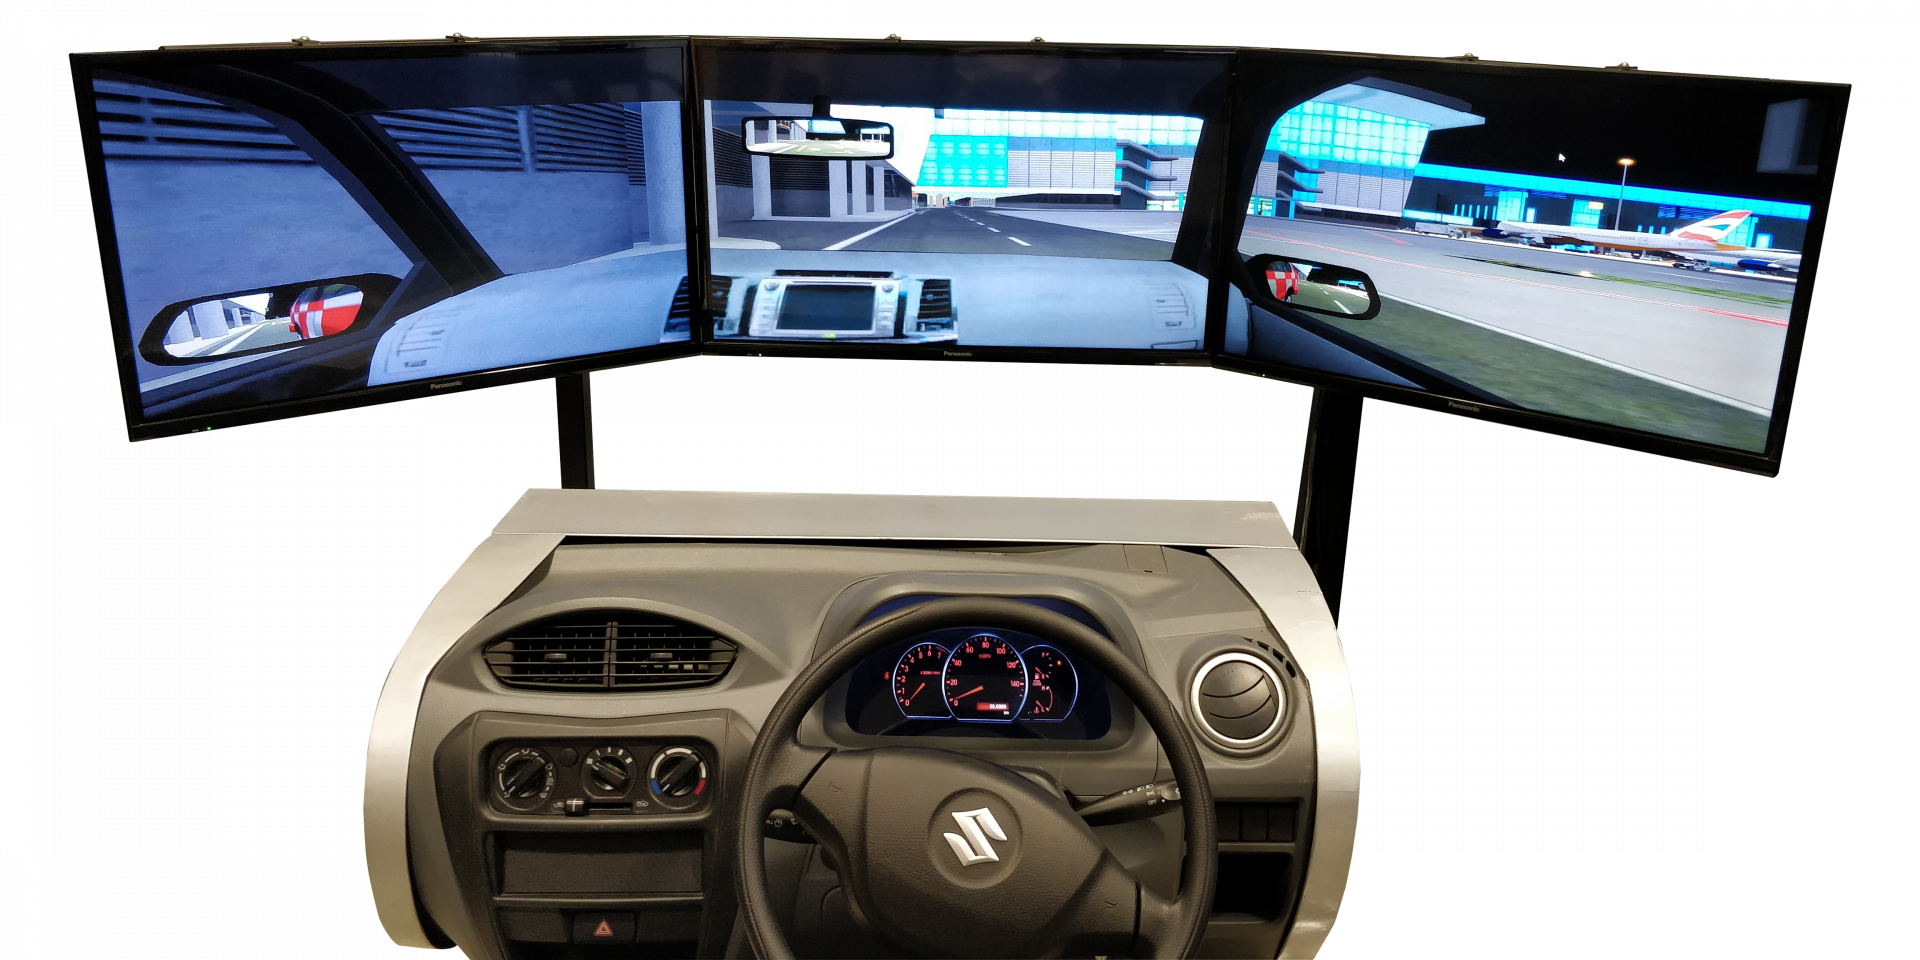 Tecknotrove Car Driving Simulator  Car Driver Training Simulator 